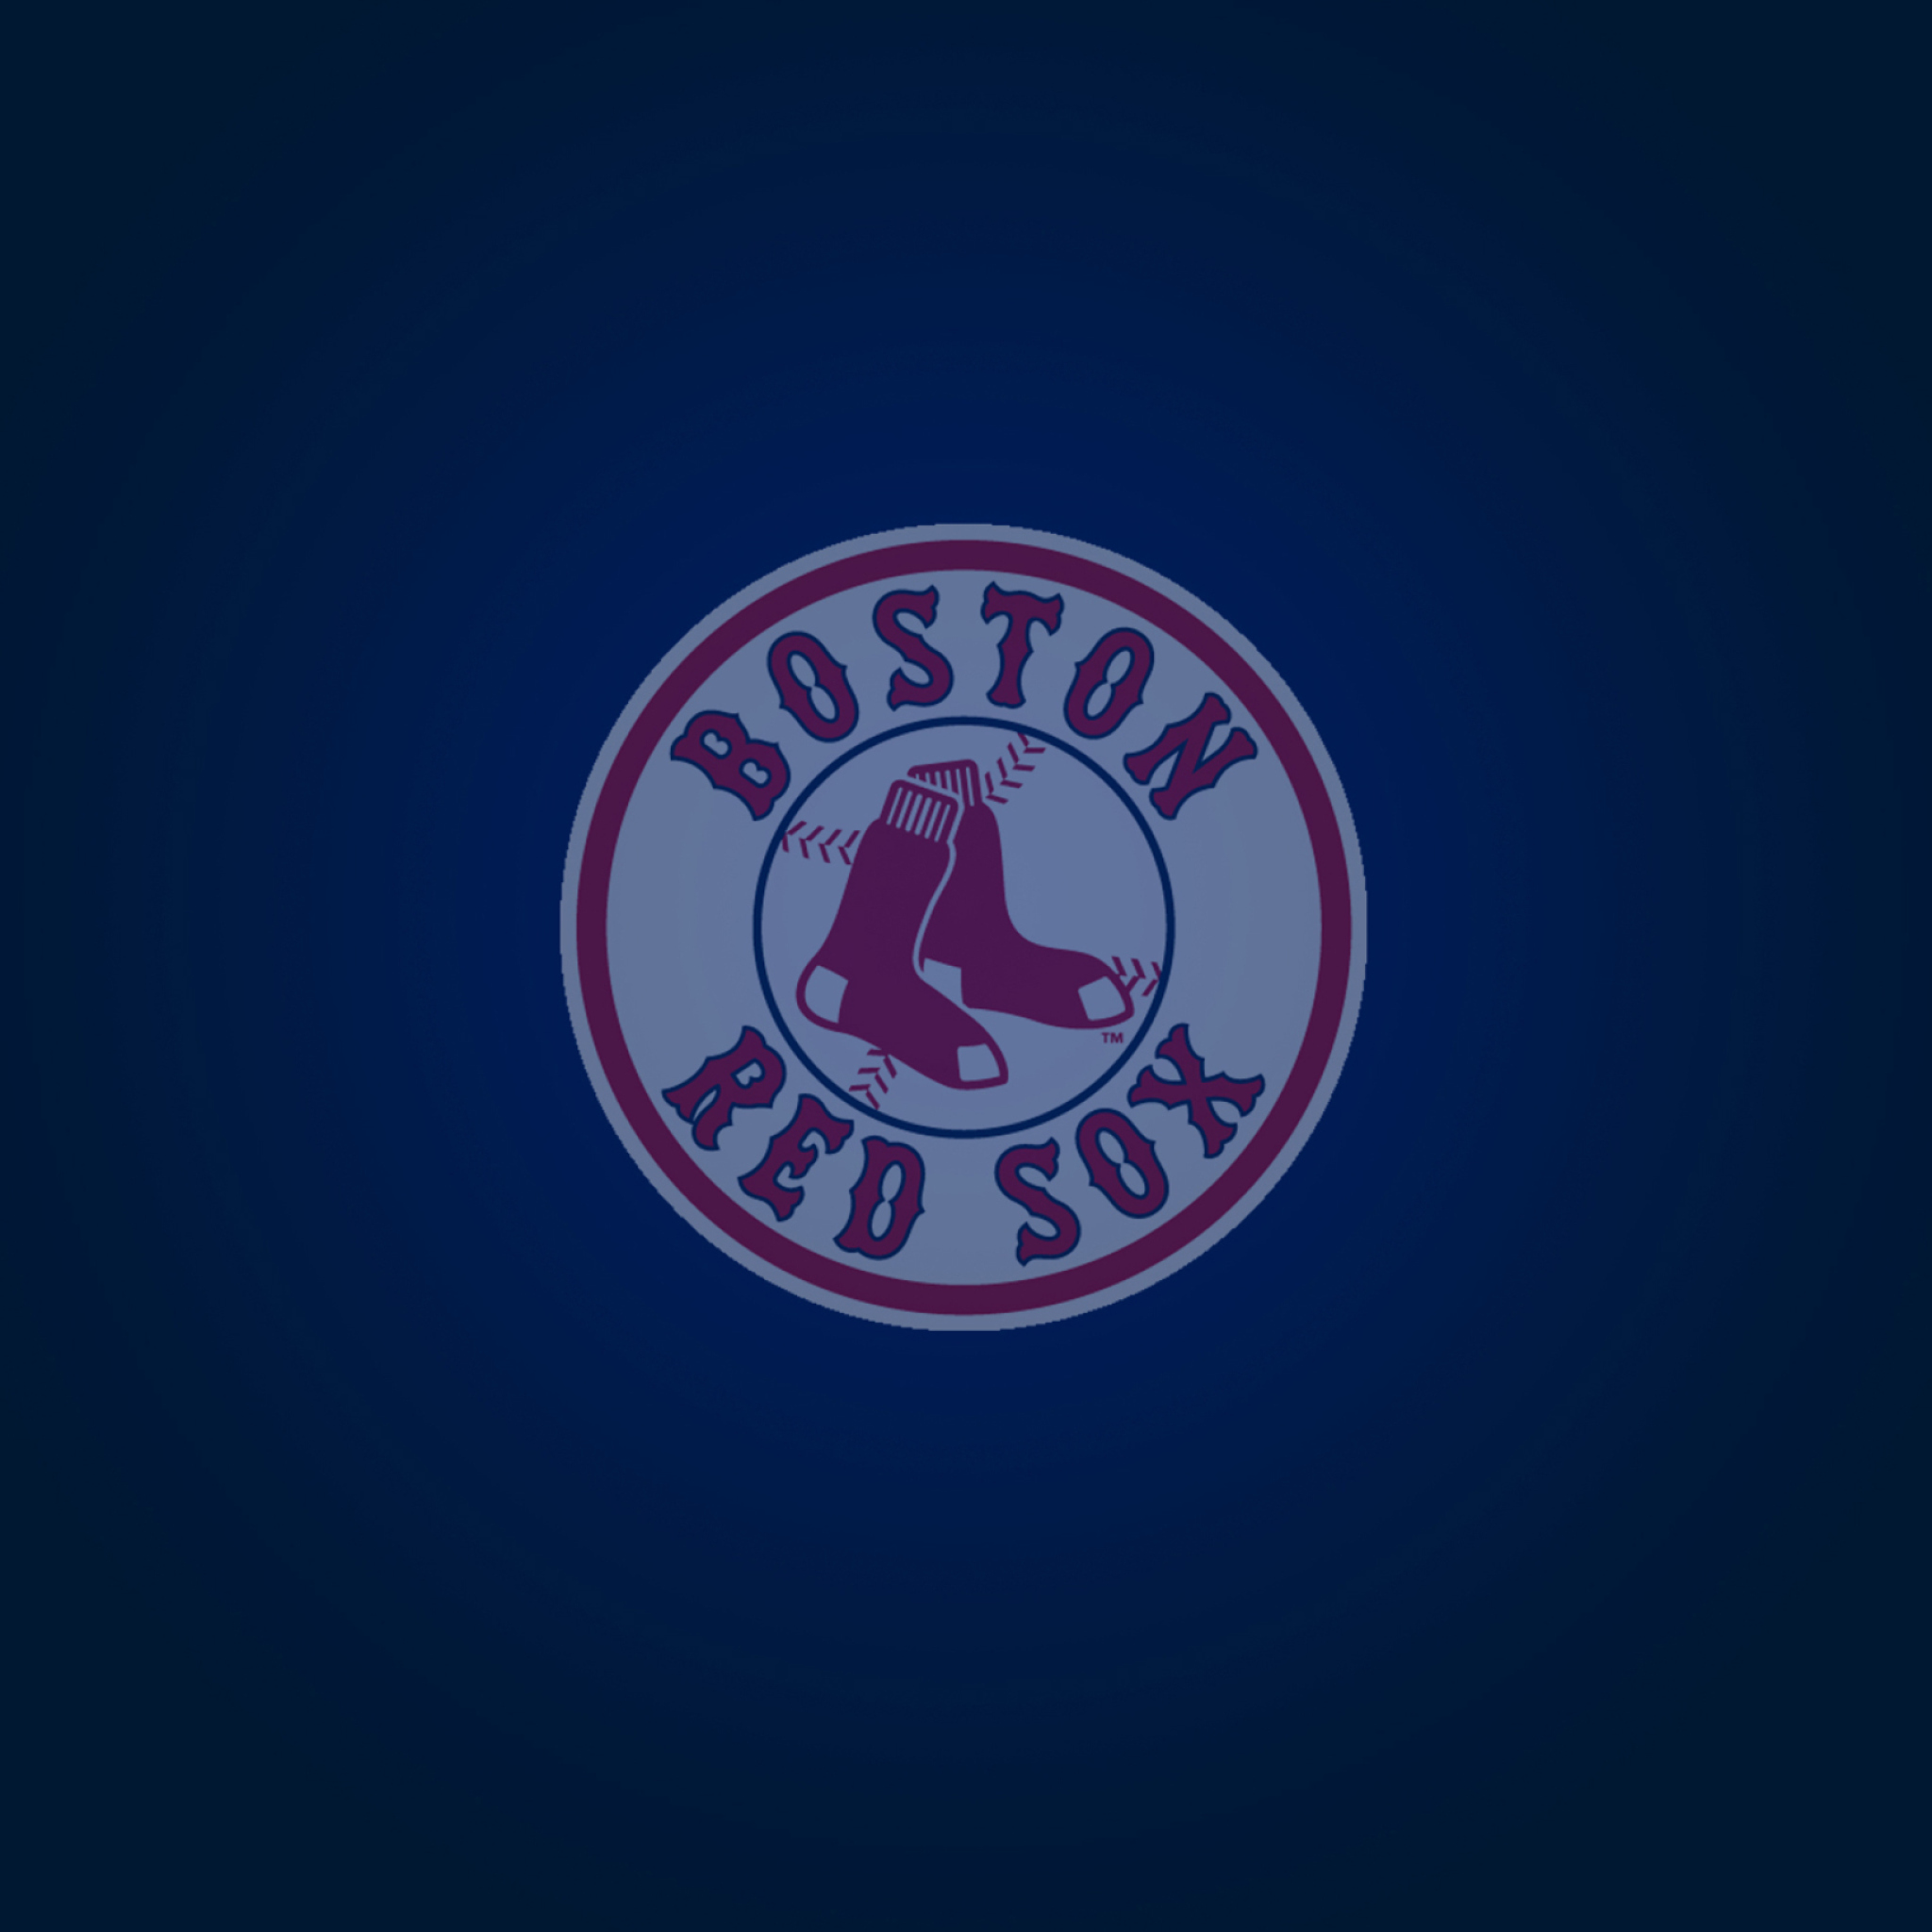 Boston Red Sox wallpaper 2048x2048